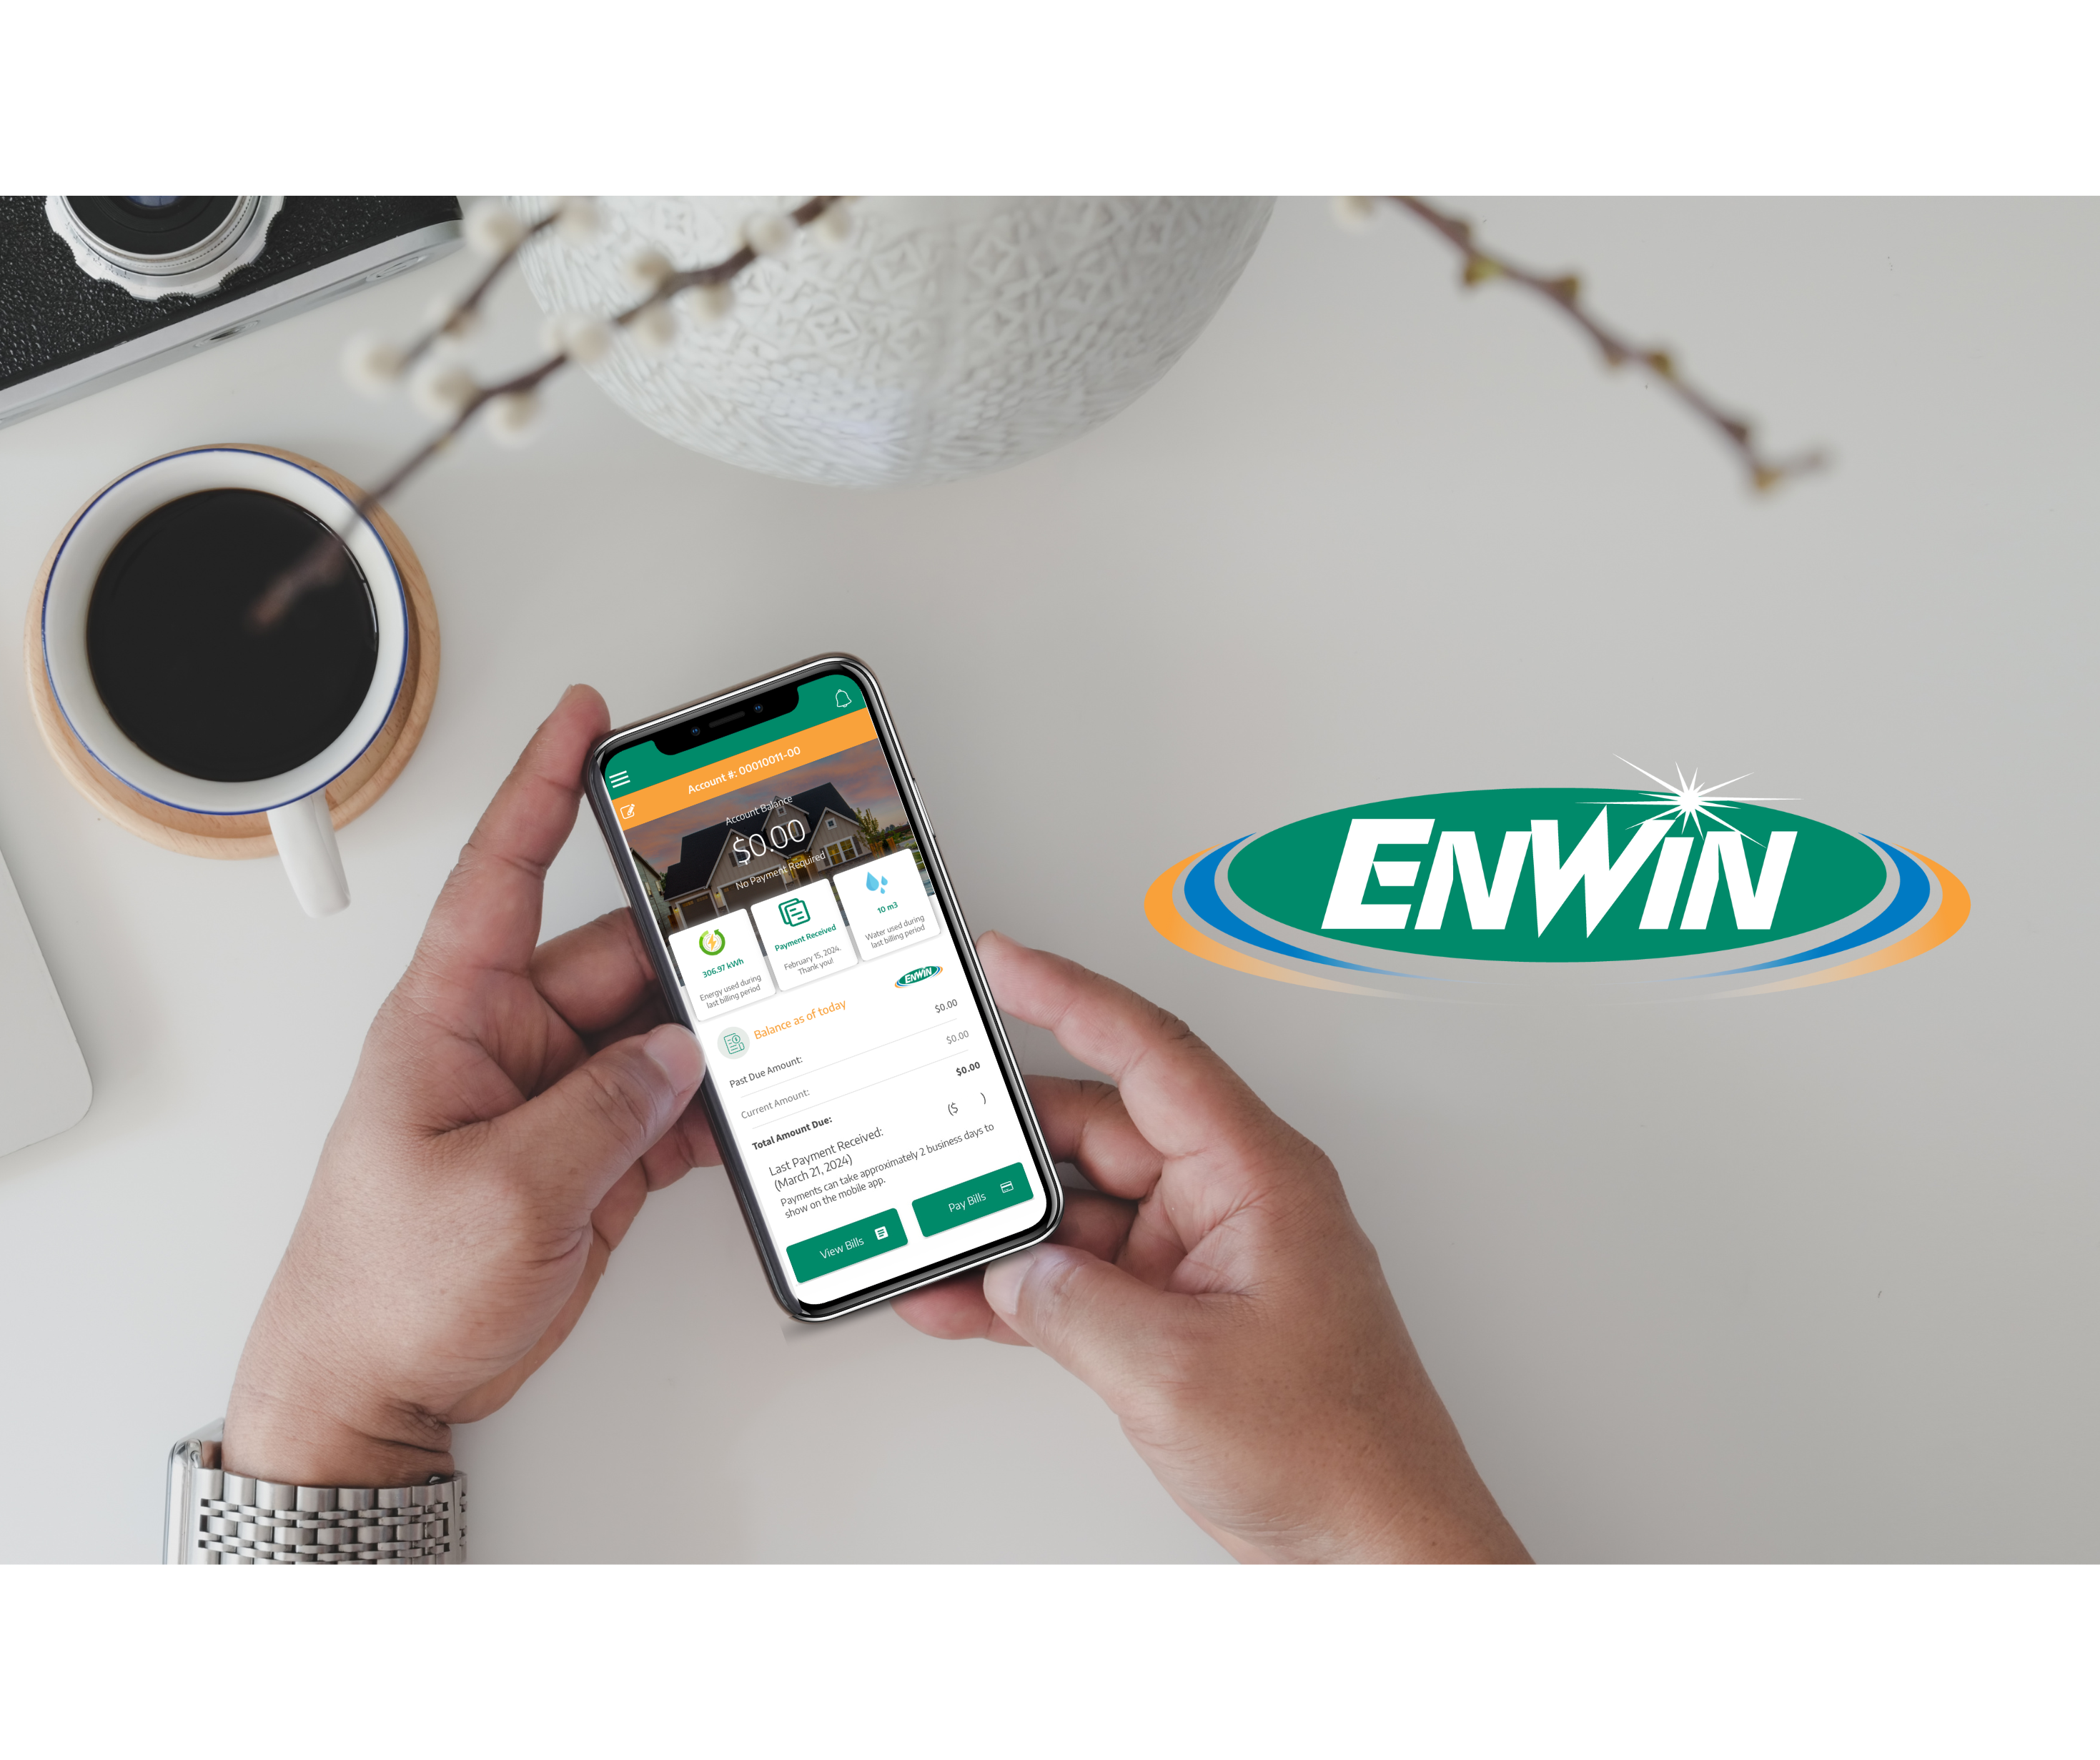 ENWIN App phone and logo